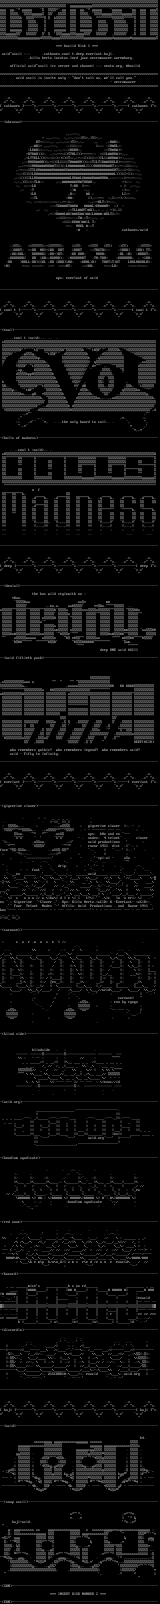 ACiD ASCII logocluster #15 by Multiple Artists